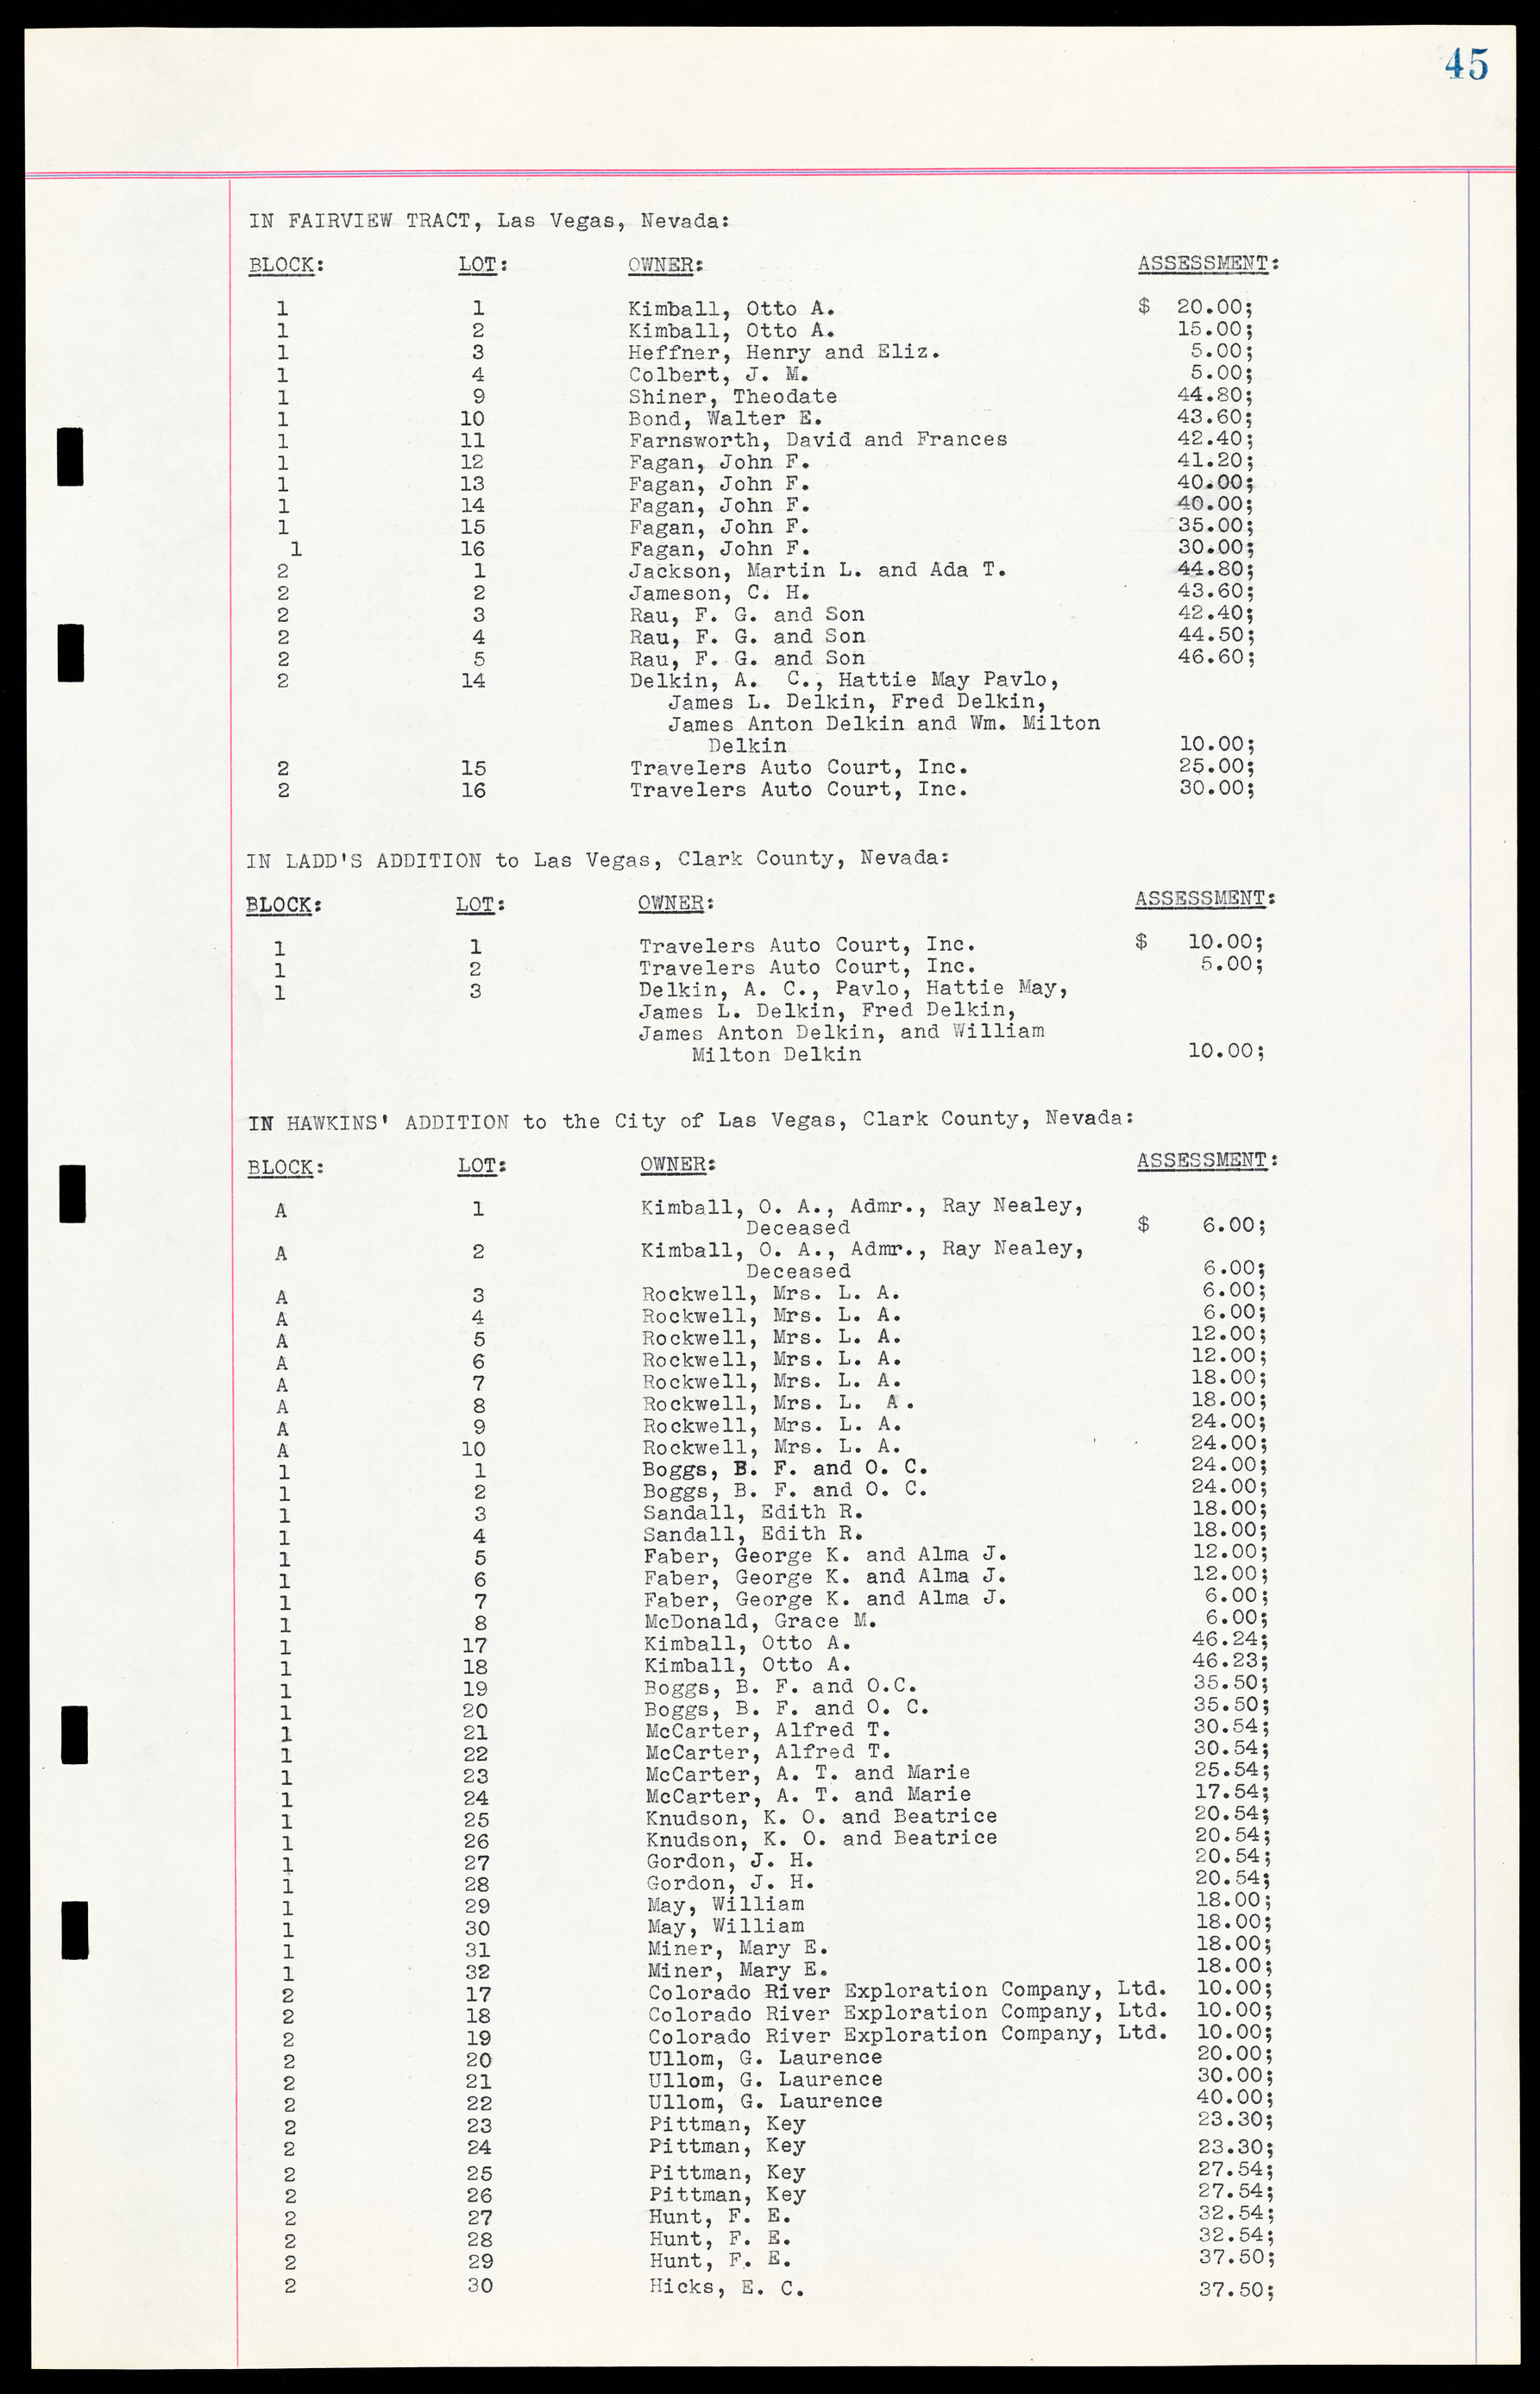 Las Vegas City Ordinances, March 31, 1933 to October 25, 1950, lvc000014-63